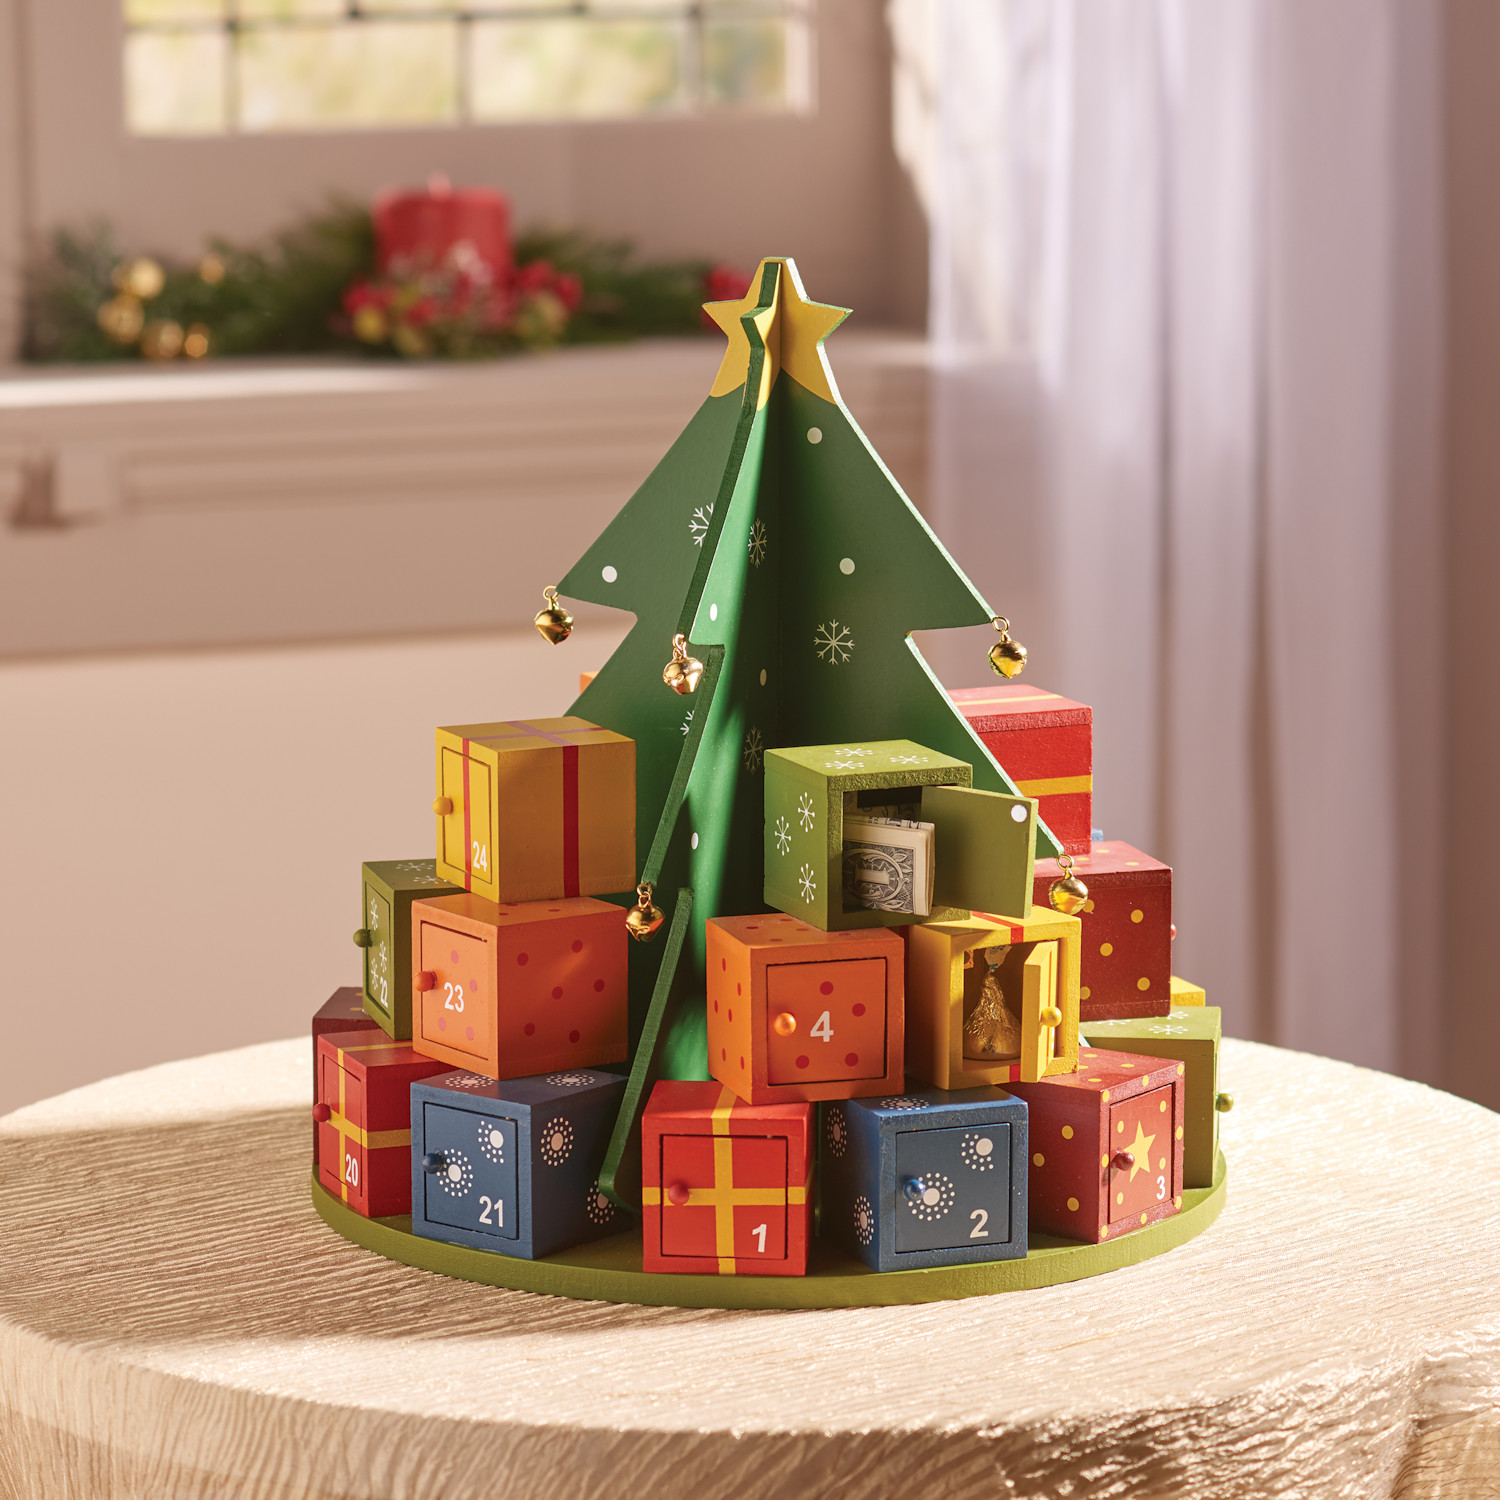 Christmas Gifts Around the Tree Advent Calendar  2 Reviews  5 Stars